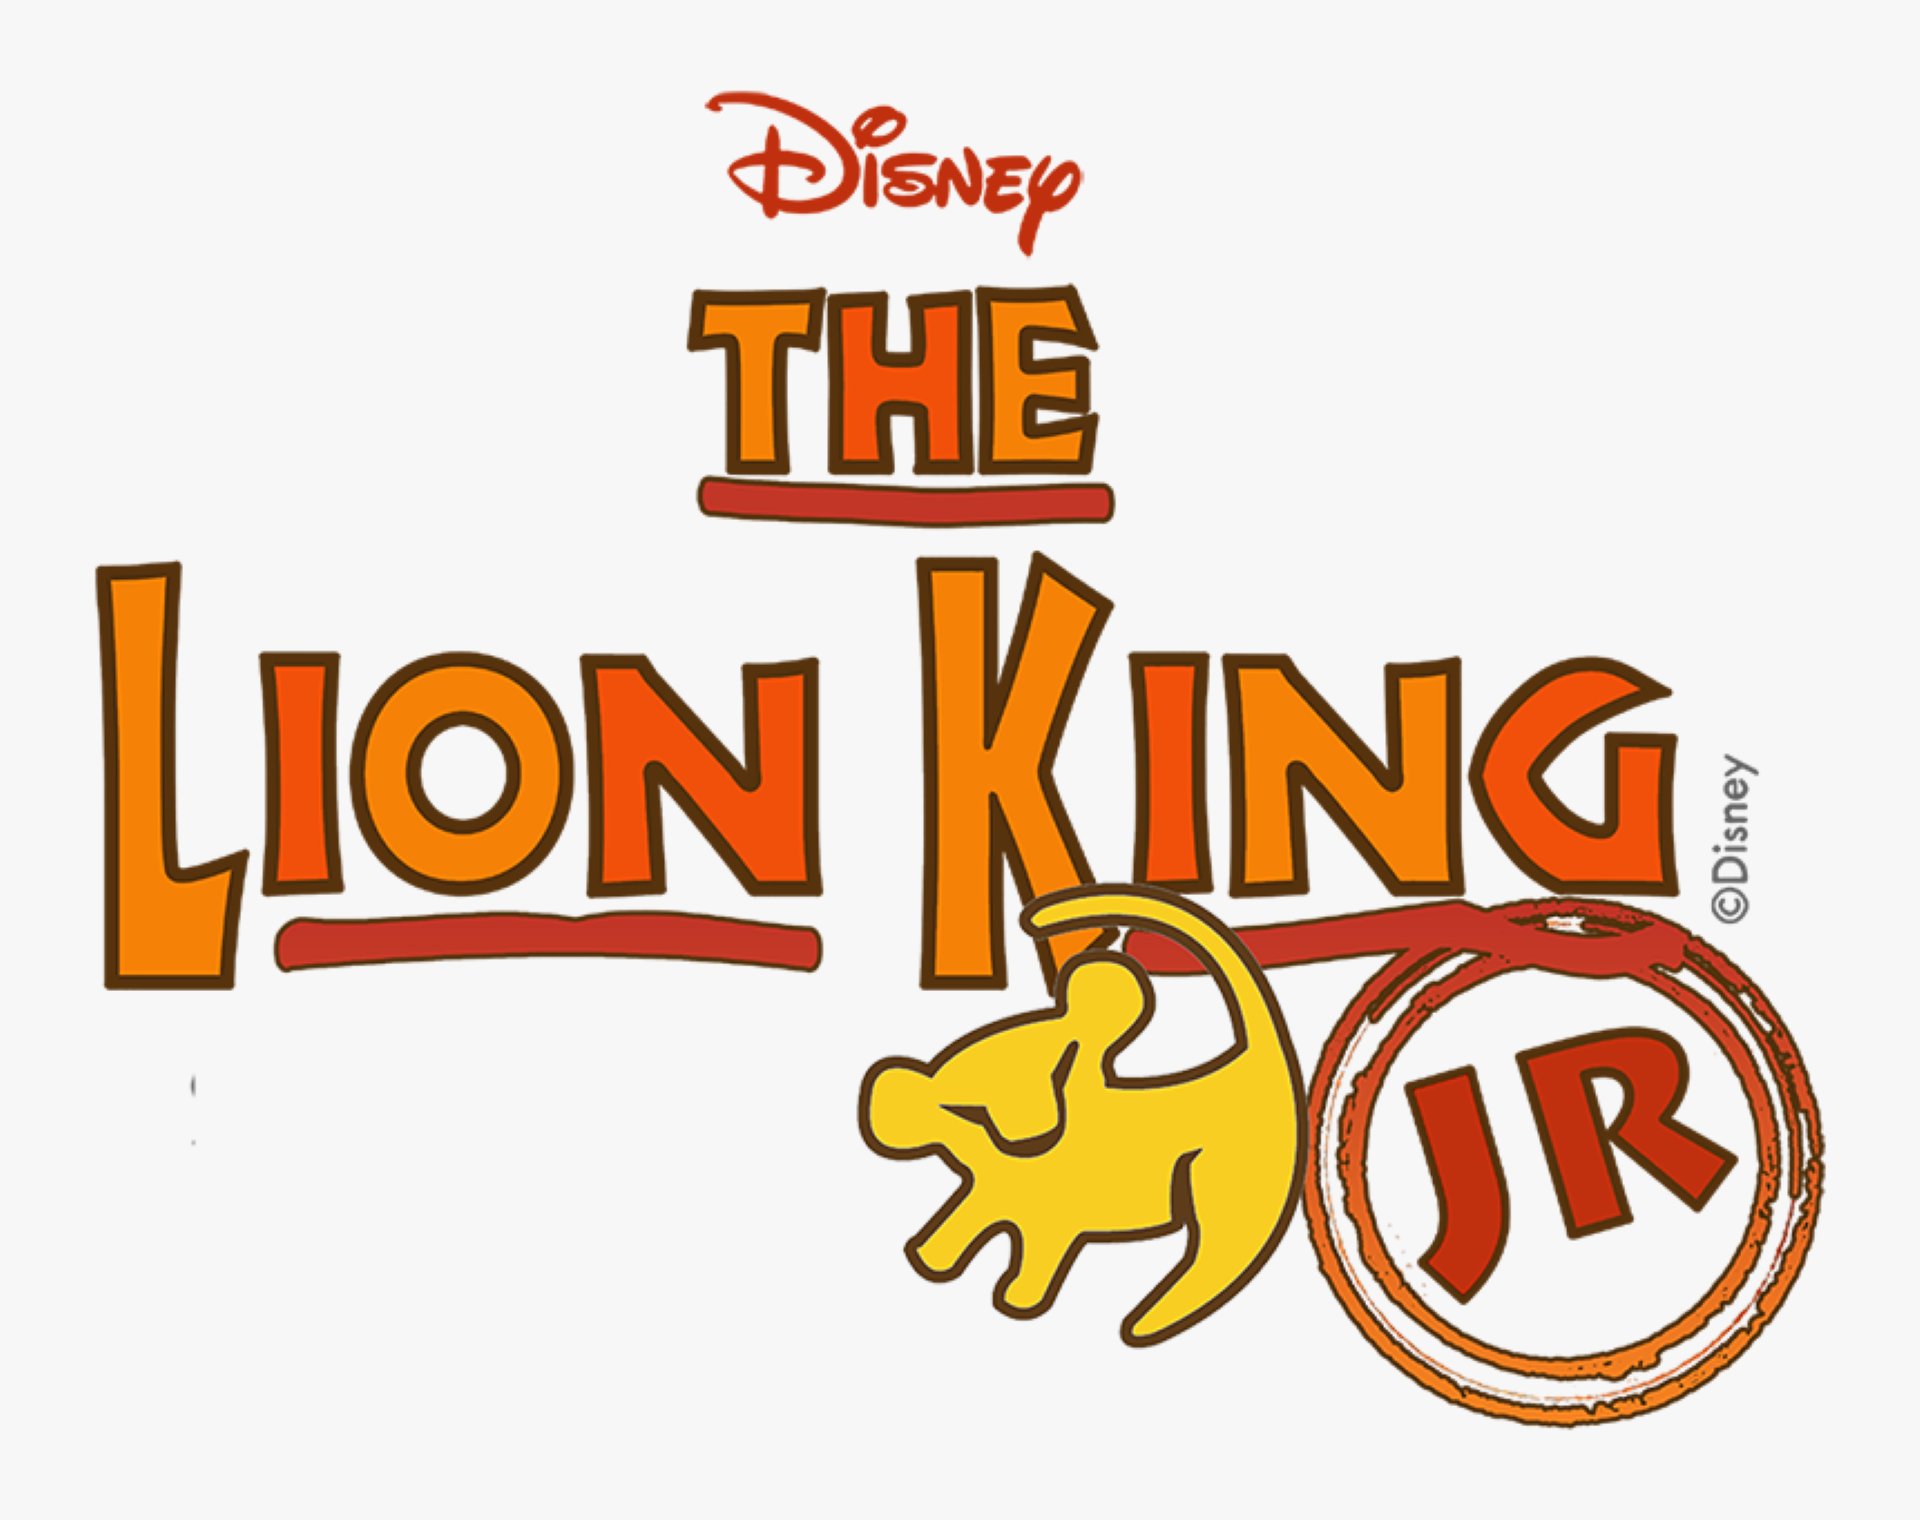 BergenPAC Performing Arts School's Production of Disney’s Lion king Jr